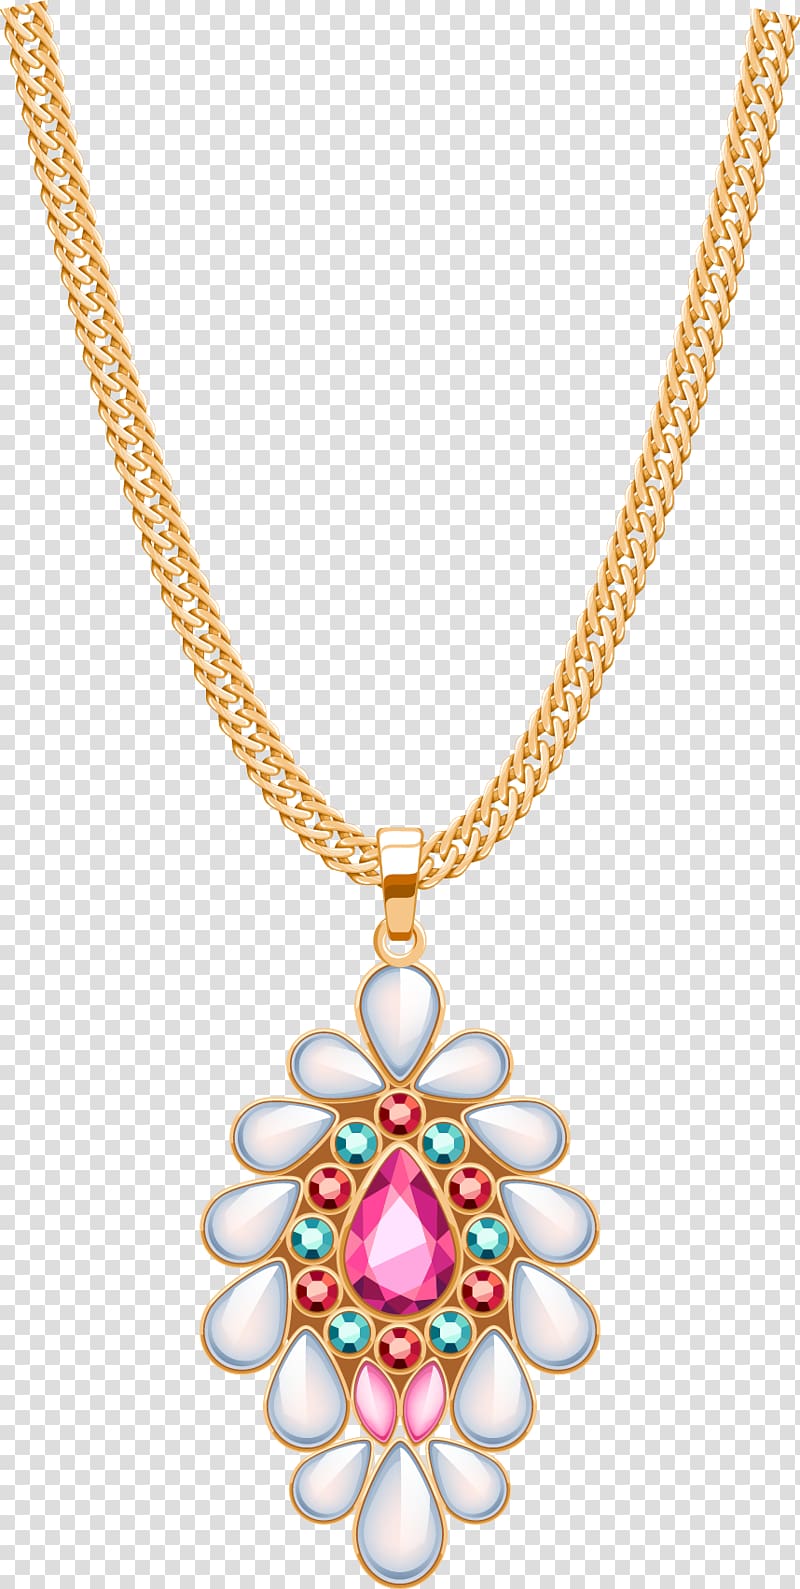 Locket Necklace Jewellery Diamond, Dazzling jewelry diamond jewelry transparent background PNG clipart